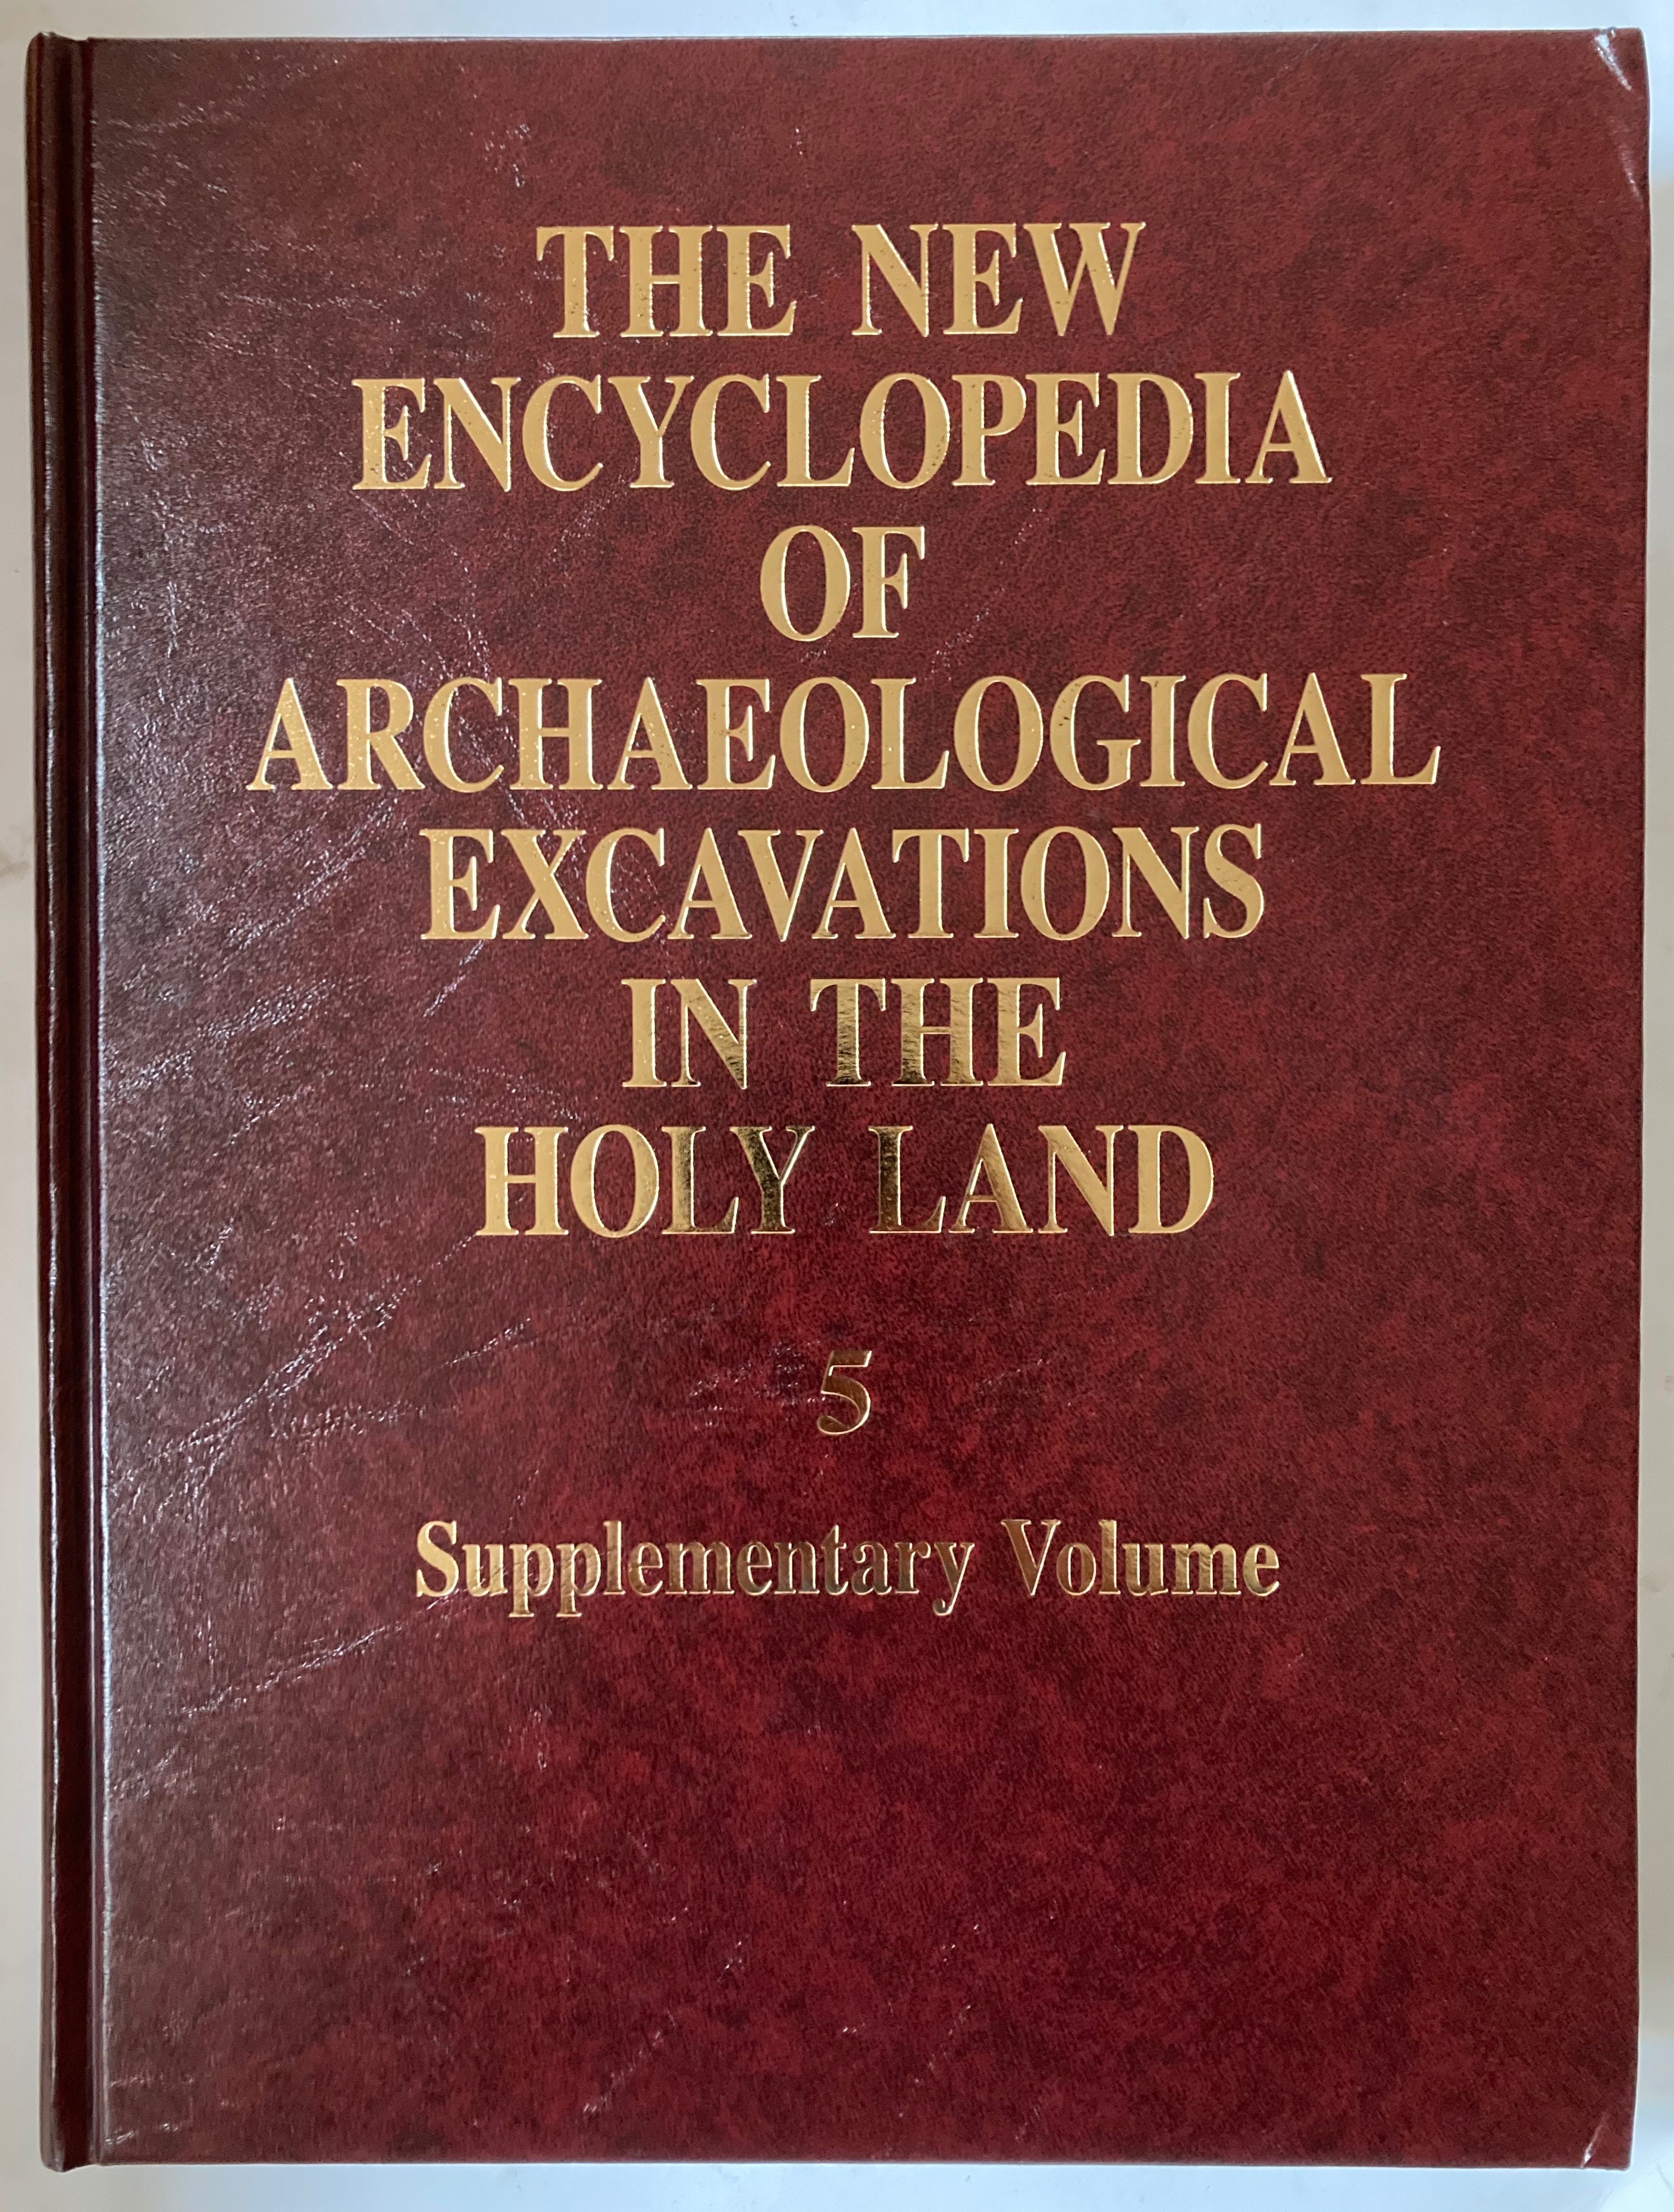 The new encyclopedia of archaeological excavations in the Holy Land. 5, Supplementary volume - Ephraim Stern; Hillel Geva; Alan Paris; J Aviram